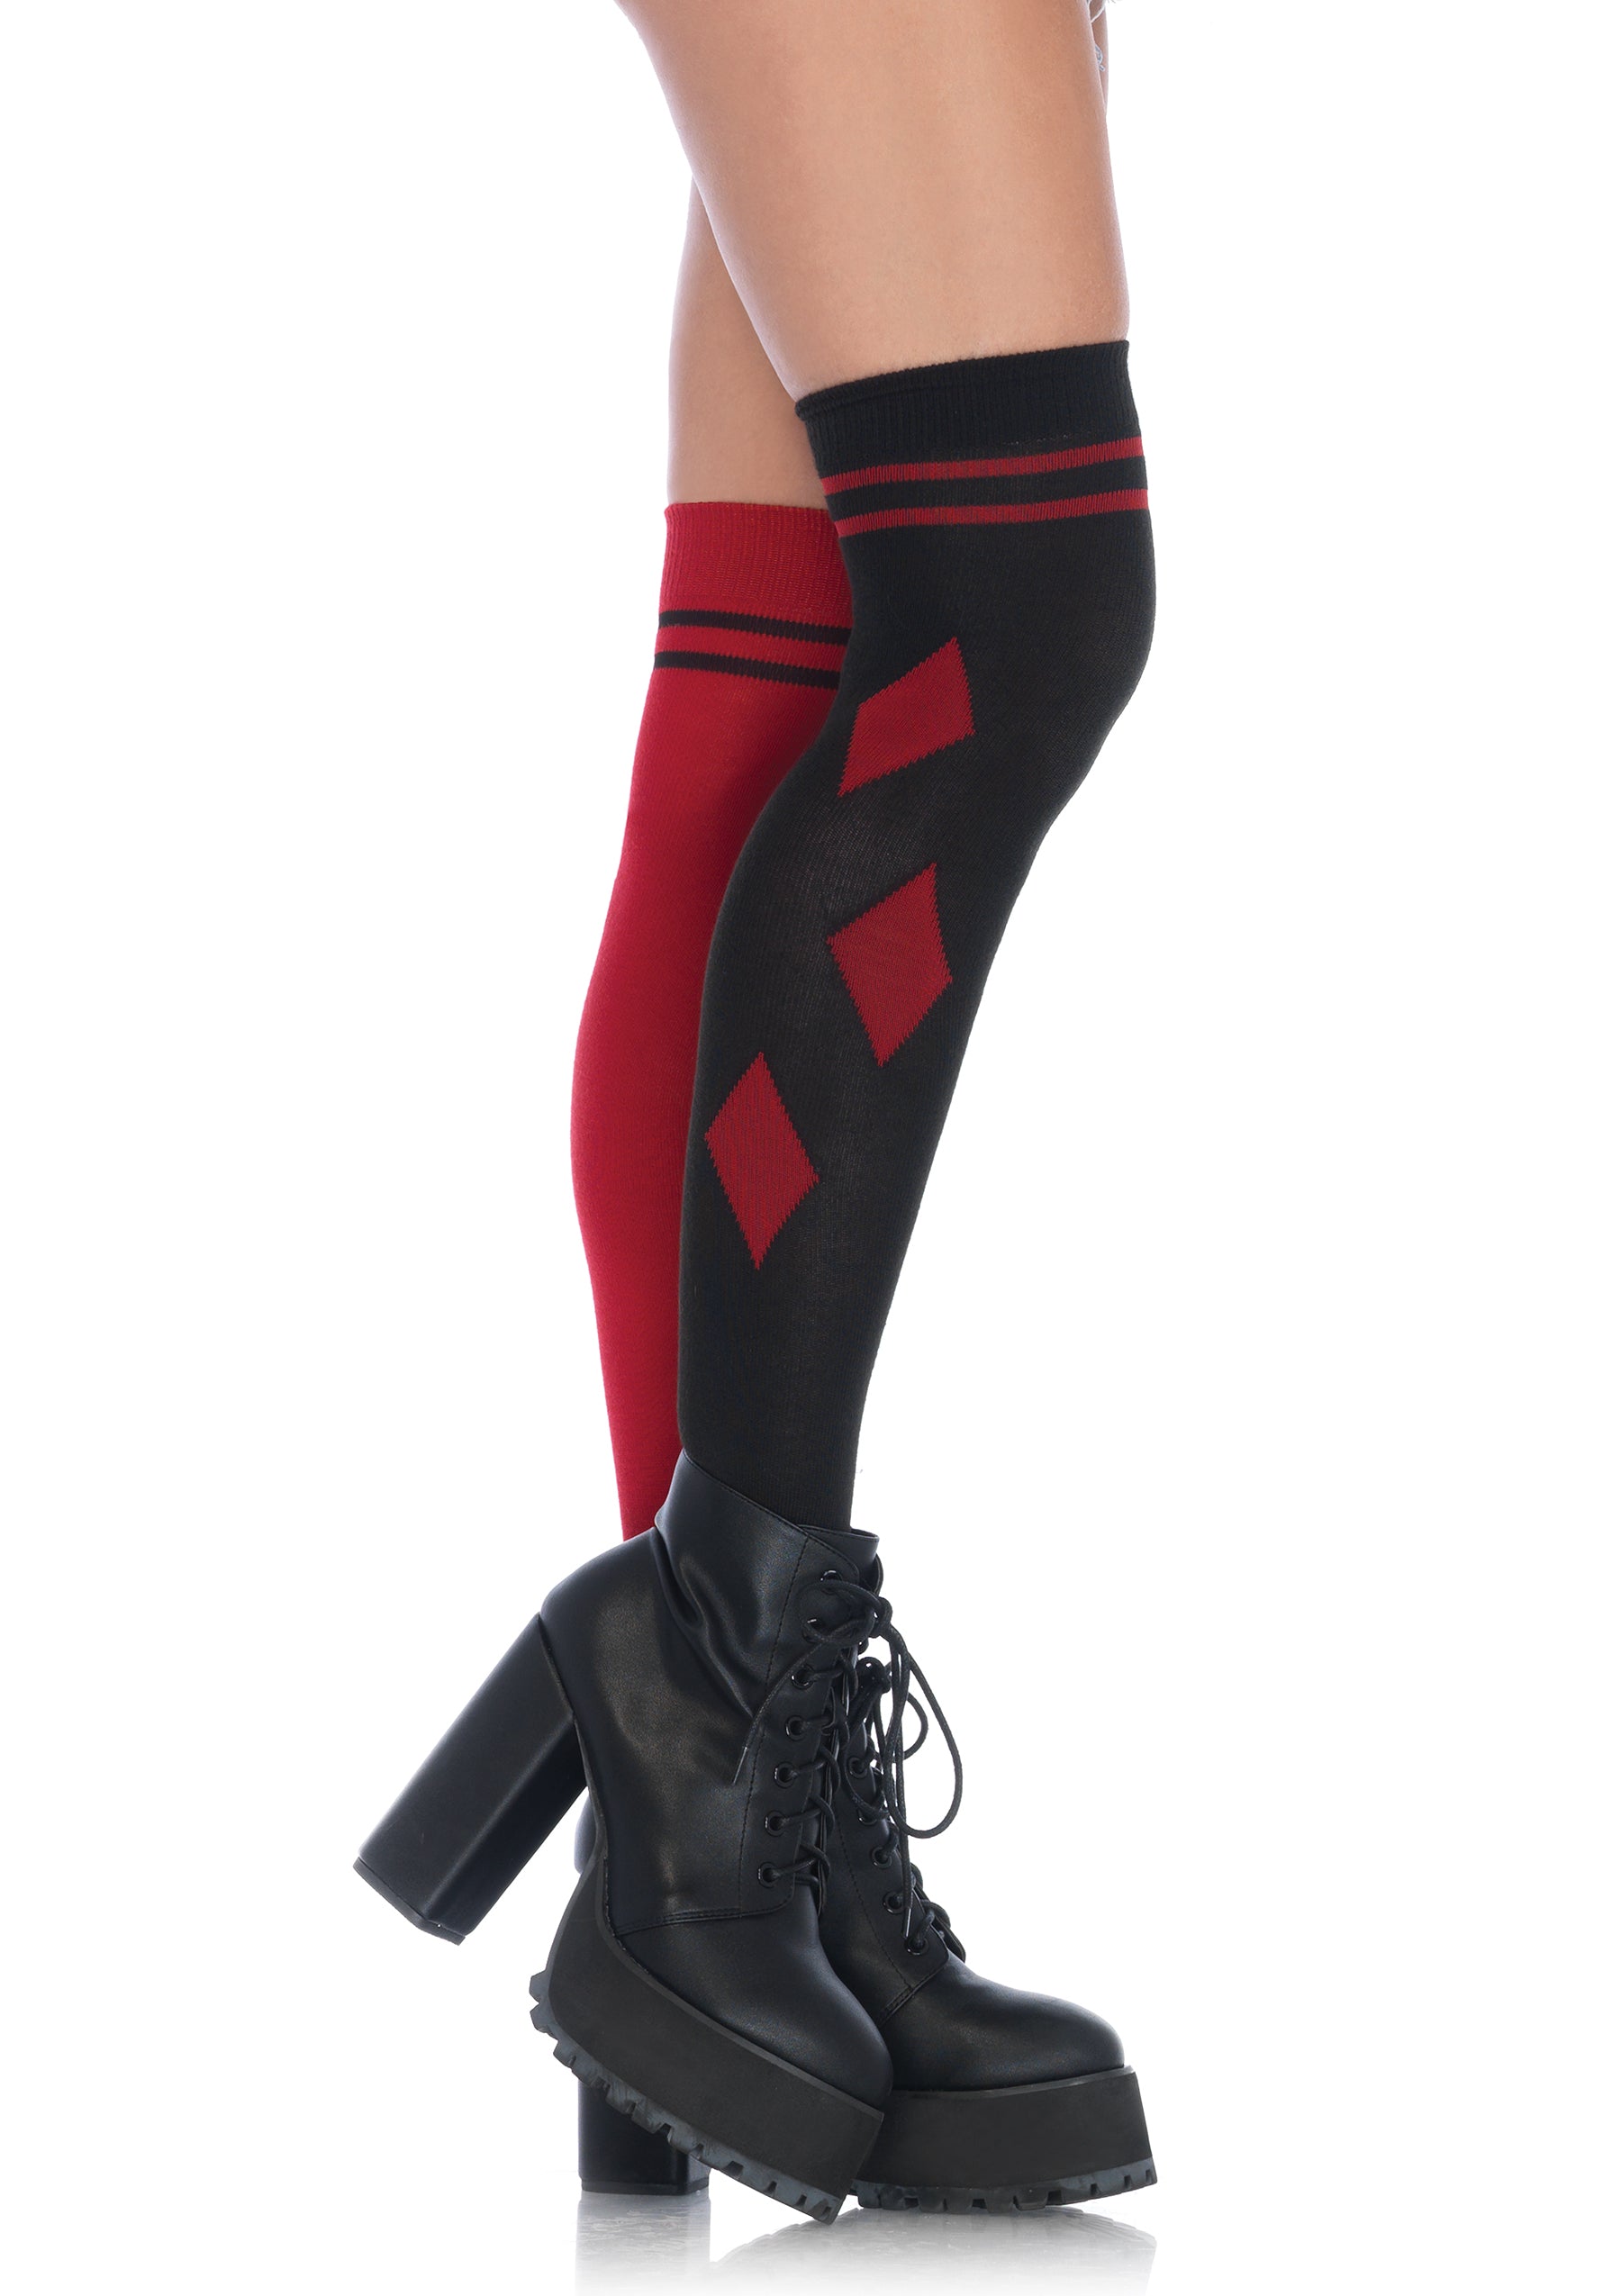 Harlequin Over the Knee Socks - One Size